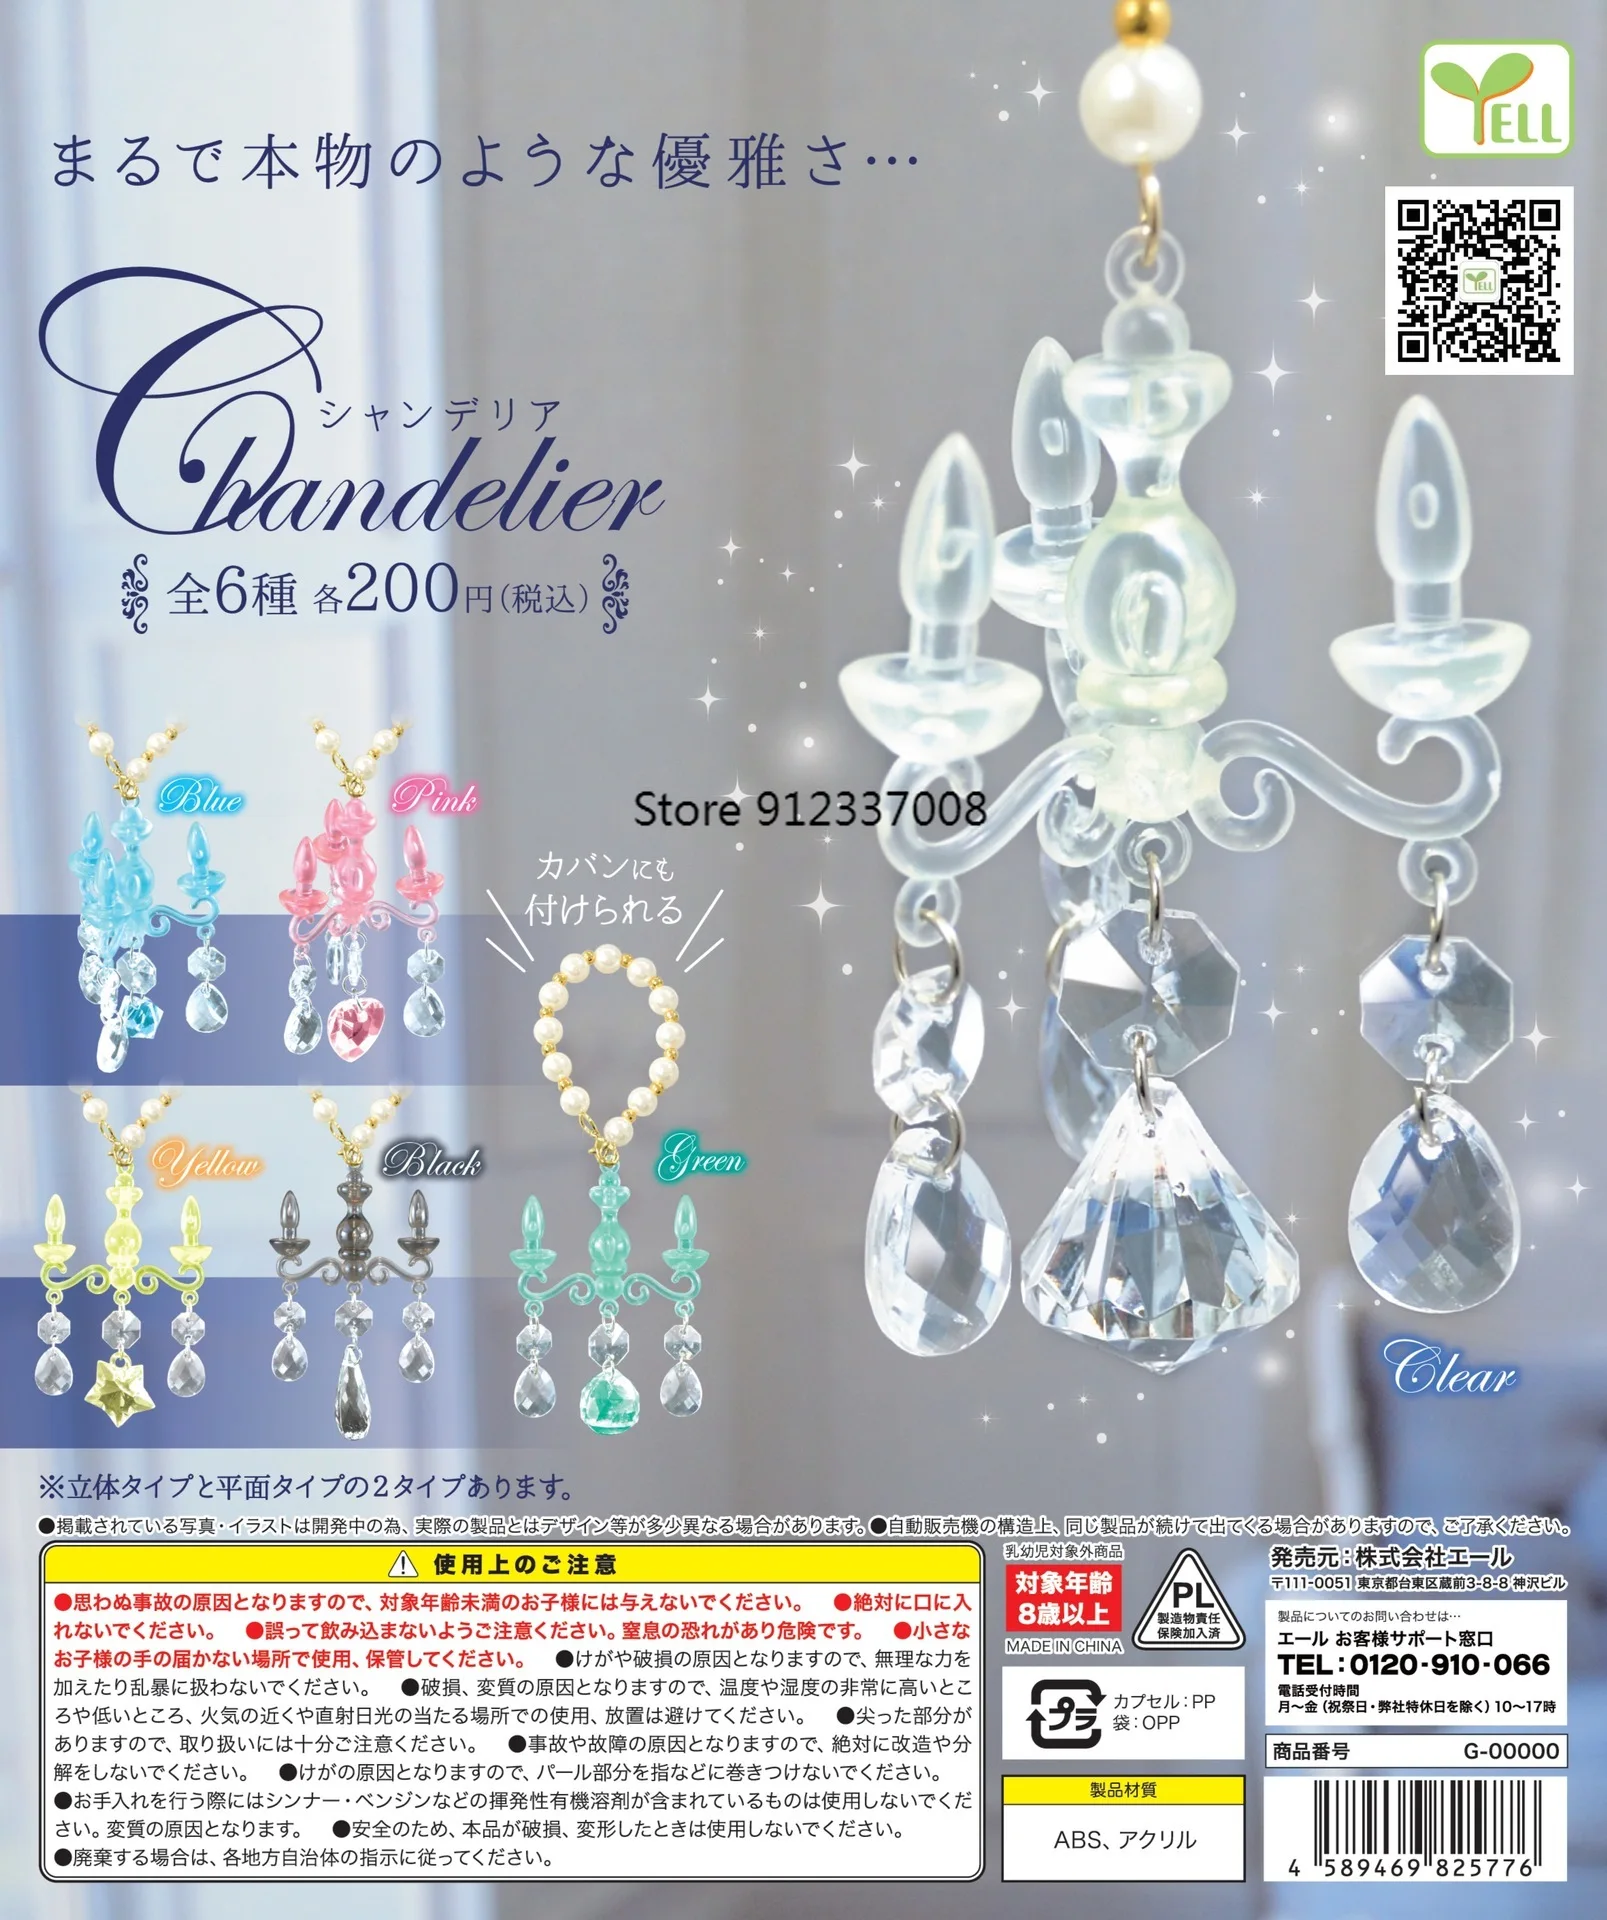 

YELL Gachapon Capsule Toy GACHA Gashapon Crystal Lamp Chandelier Miniature Model Table Ornament